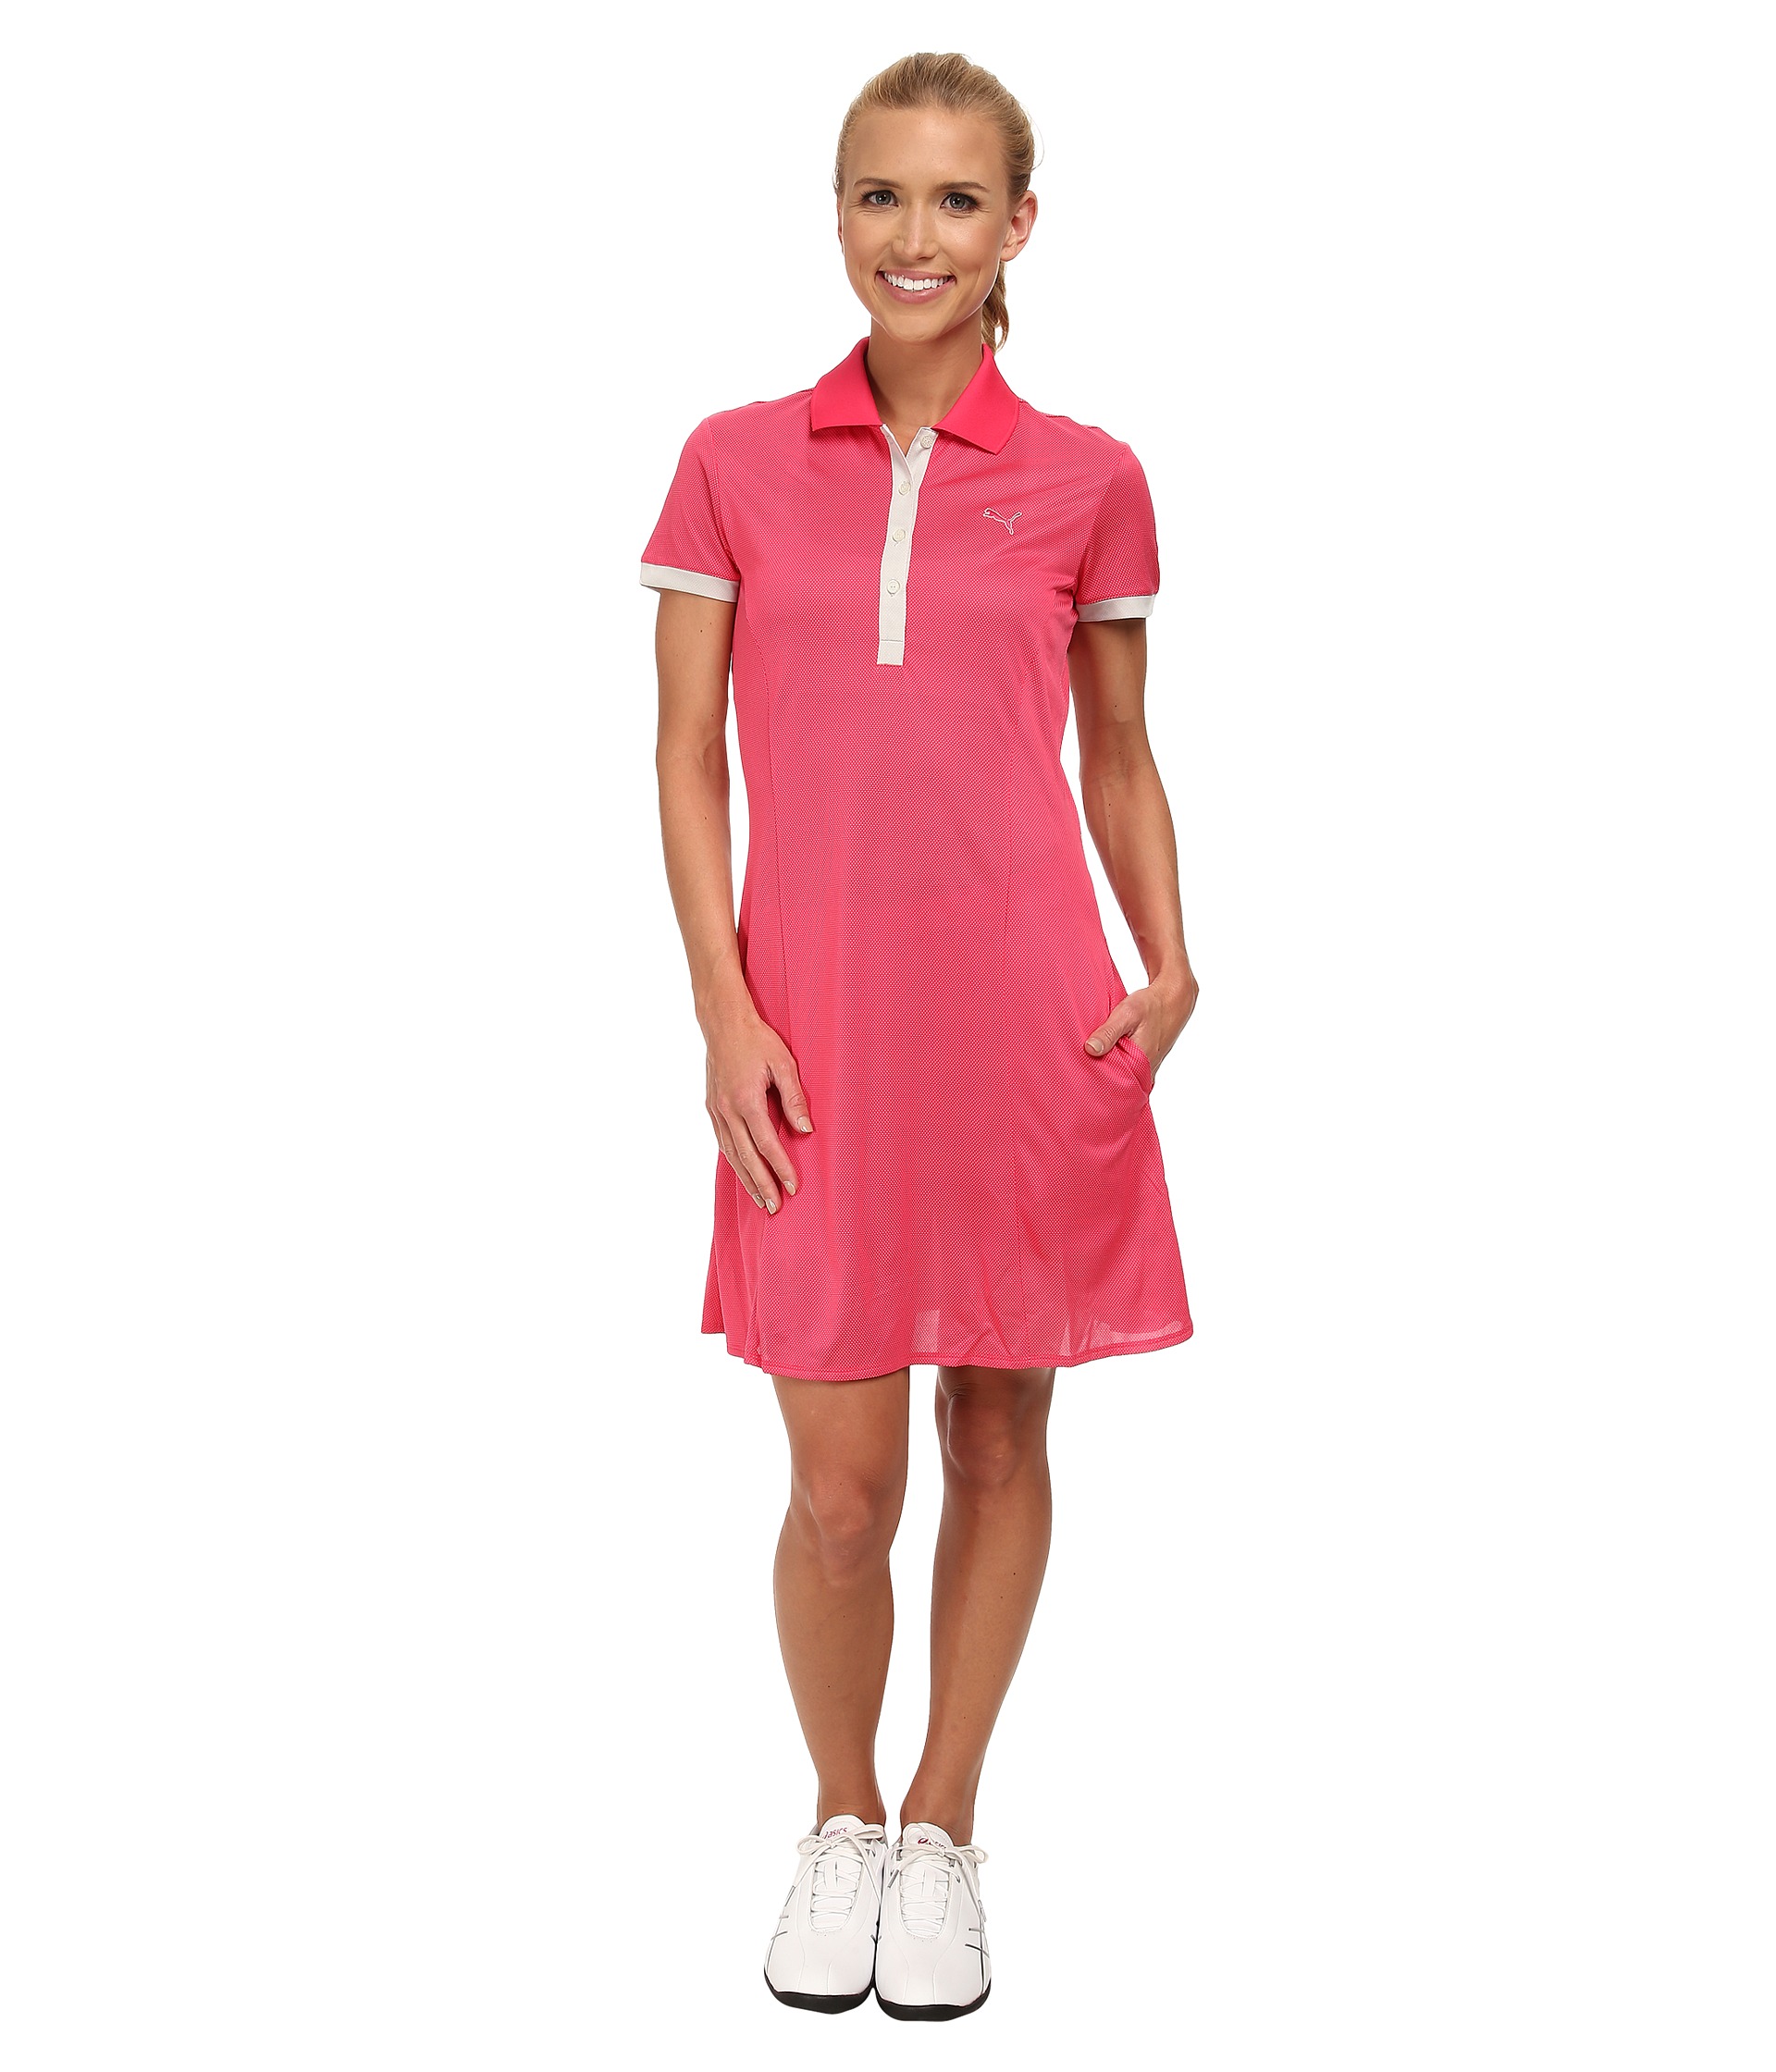 Golf Dresses For Women - Cocktail Dresses 2016